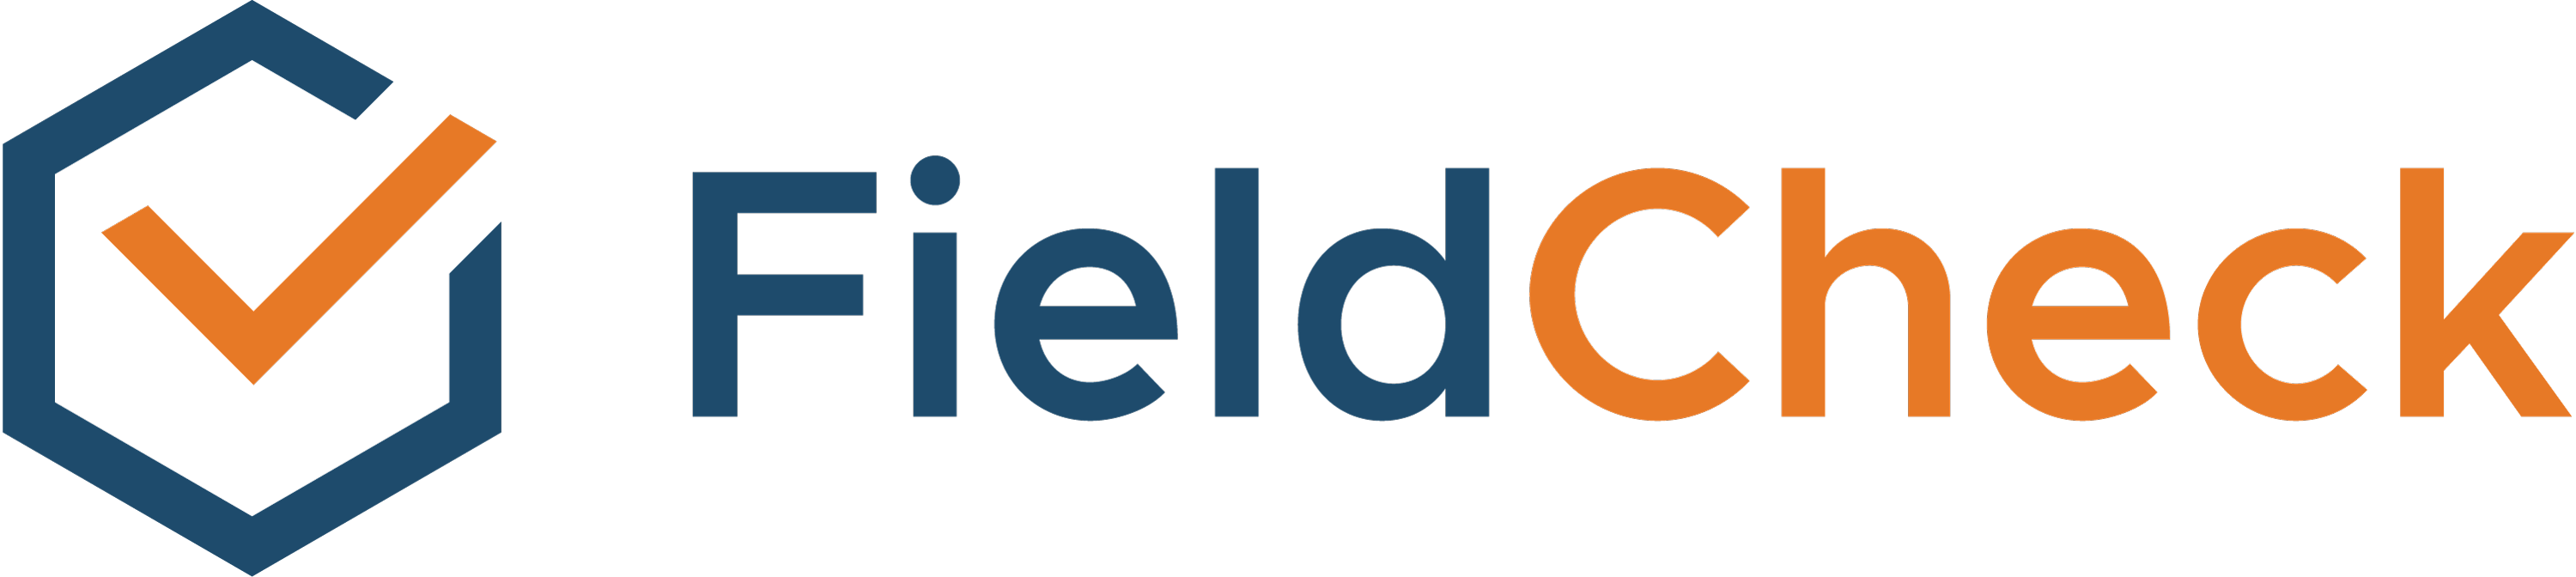 FieldCheck - Mobile Field Management Tools